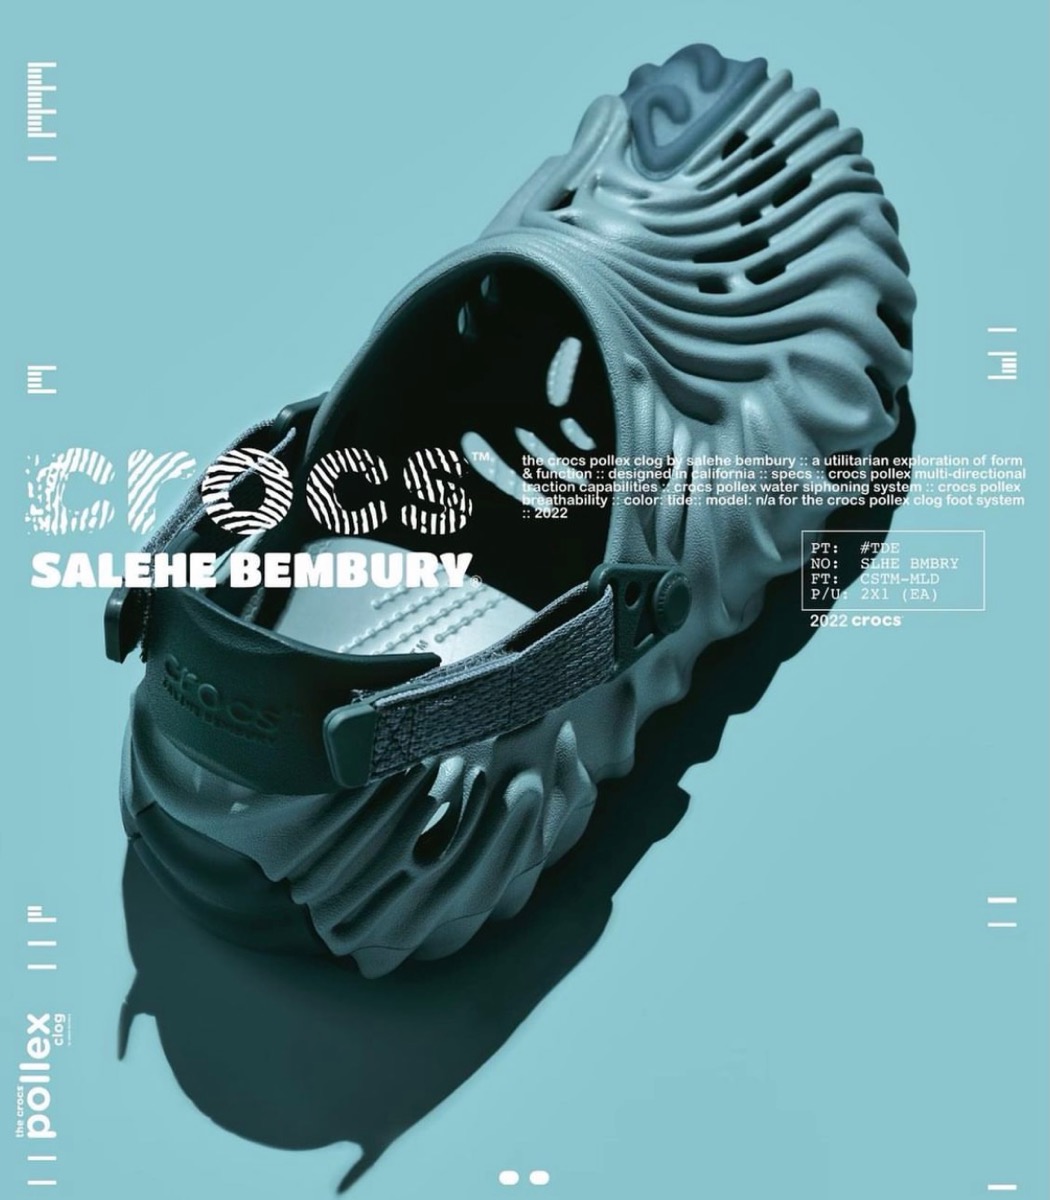 Salehe Bembury × Crocs "Sasquatch"